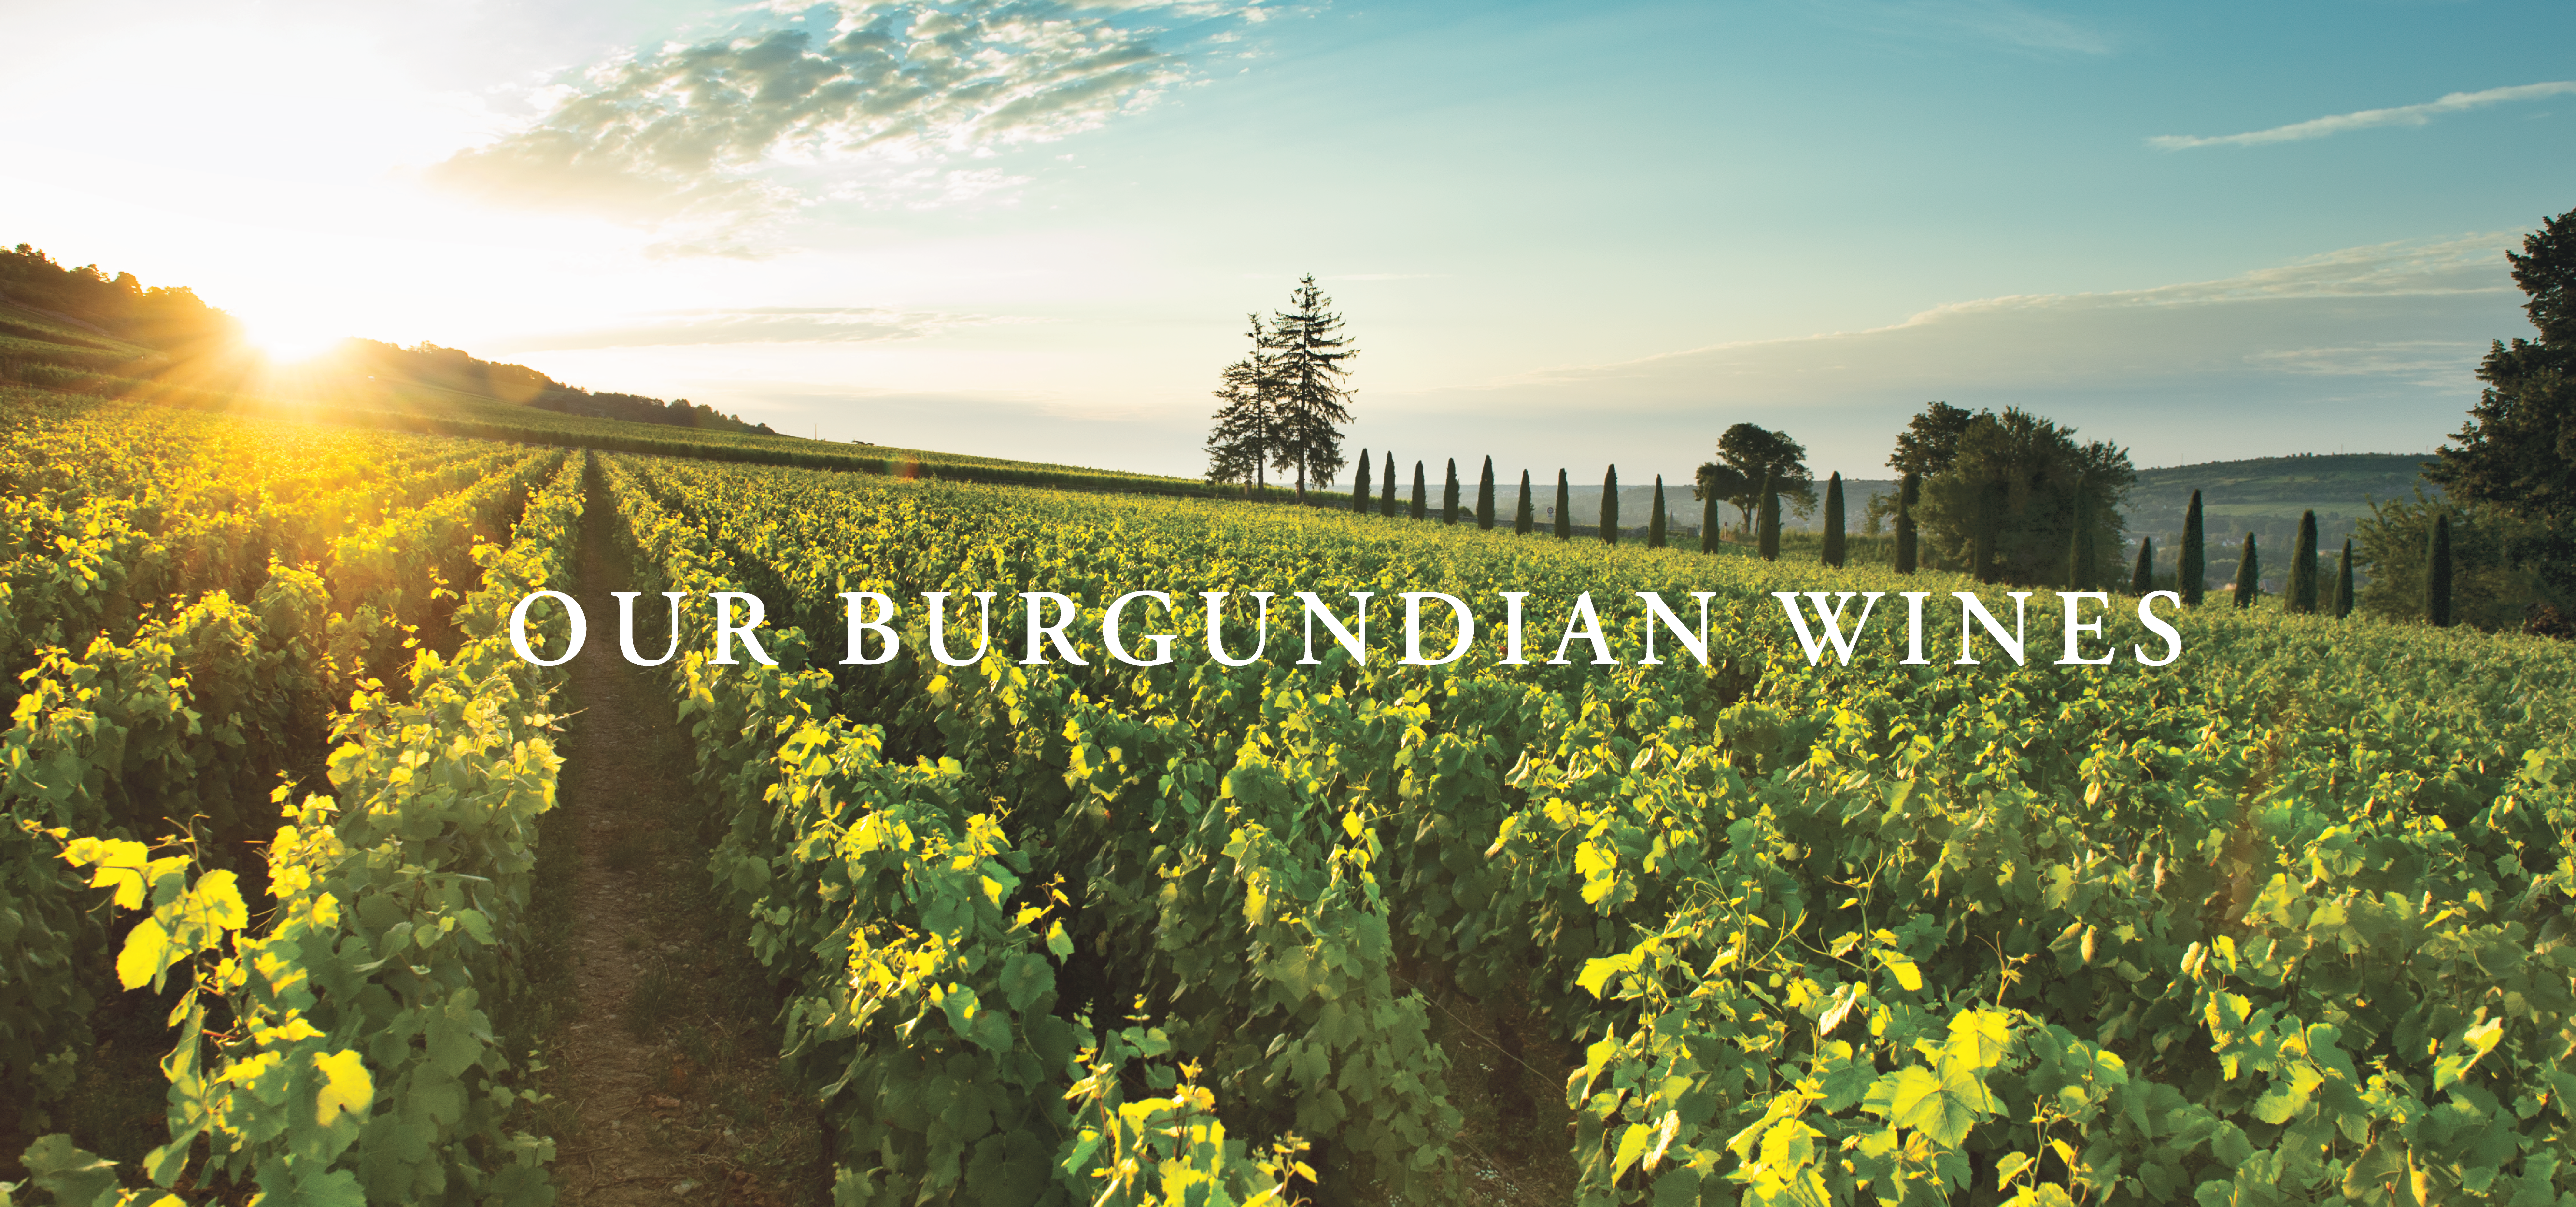 Our Burgundian Wines